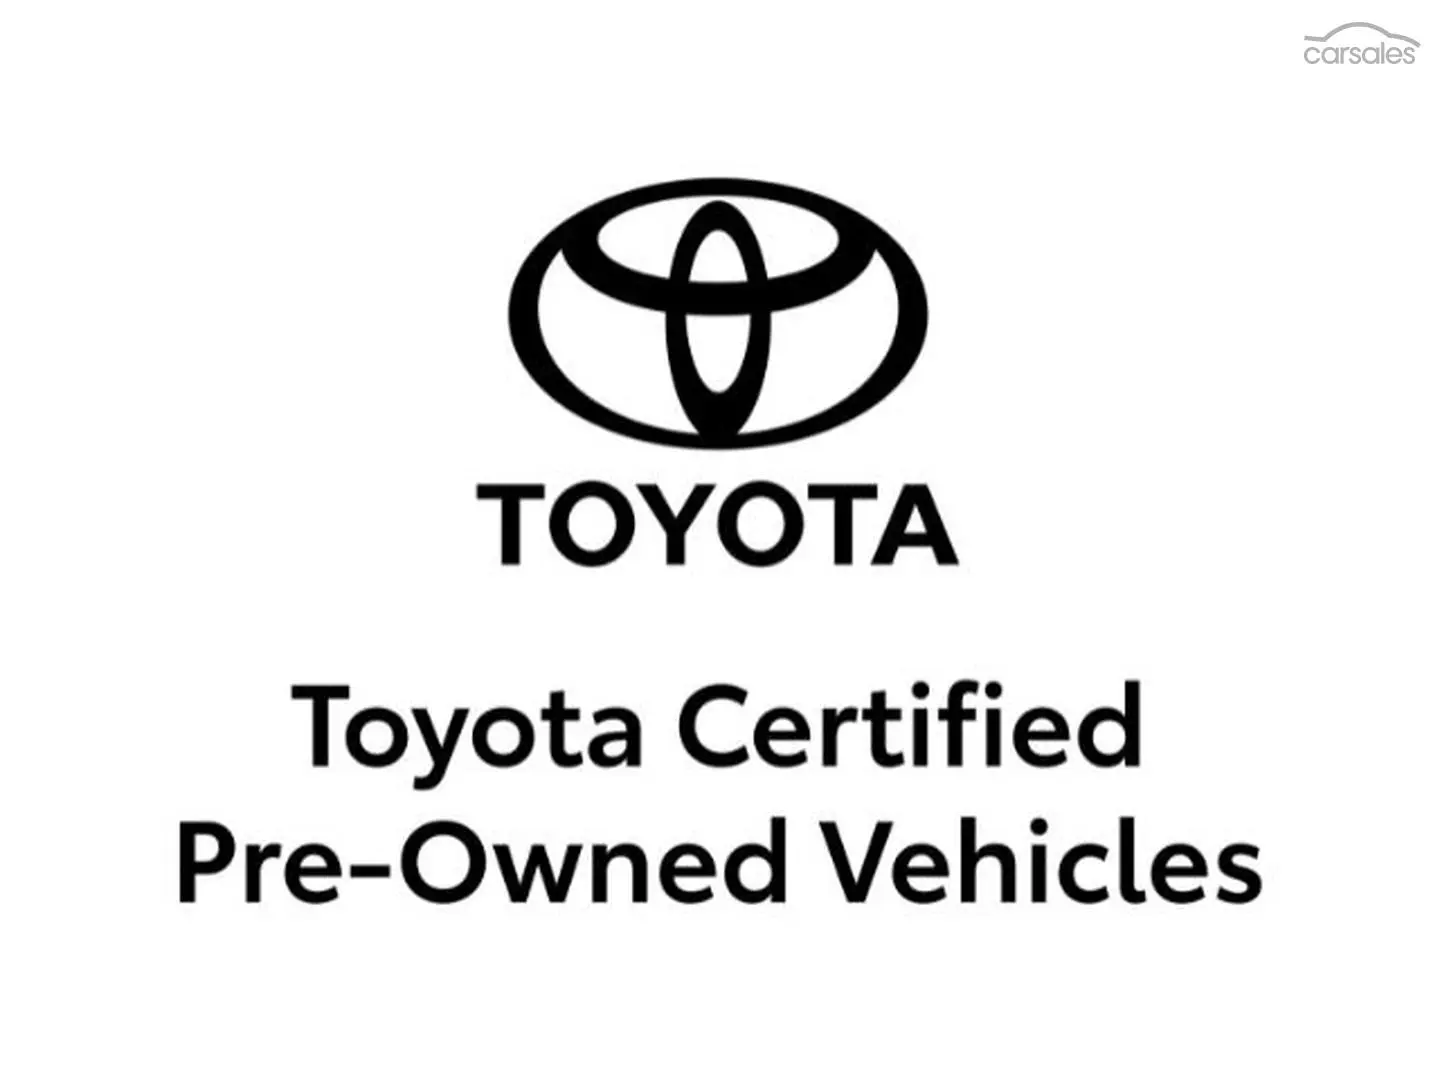 2020 Toyota Landcruiser Image 1